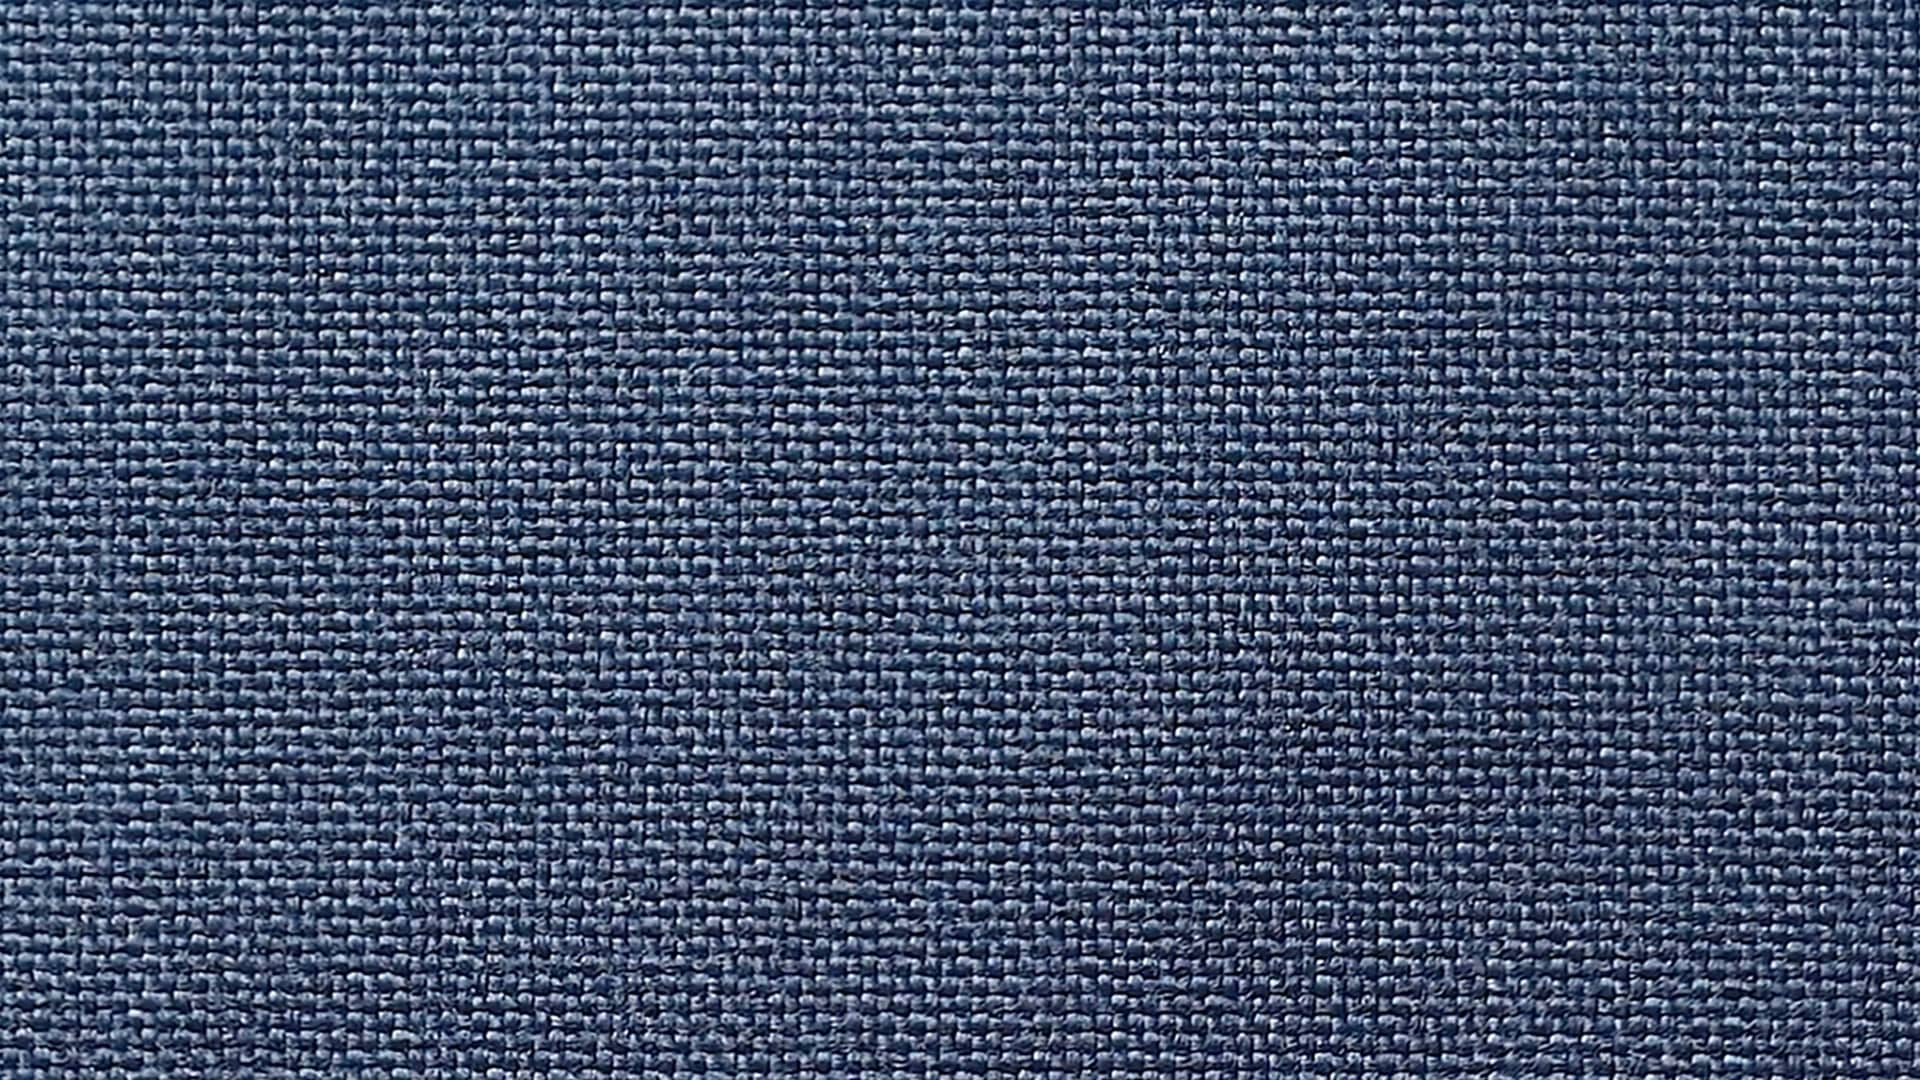 1000 D Textured Nylon Fabric